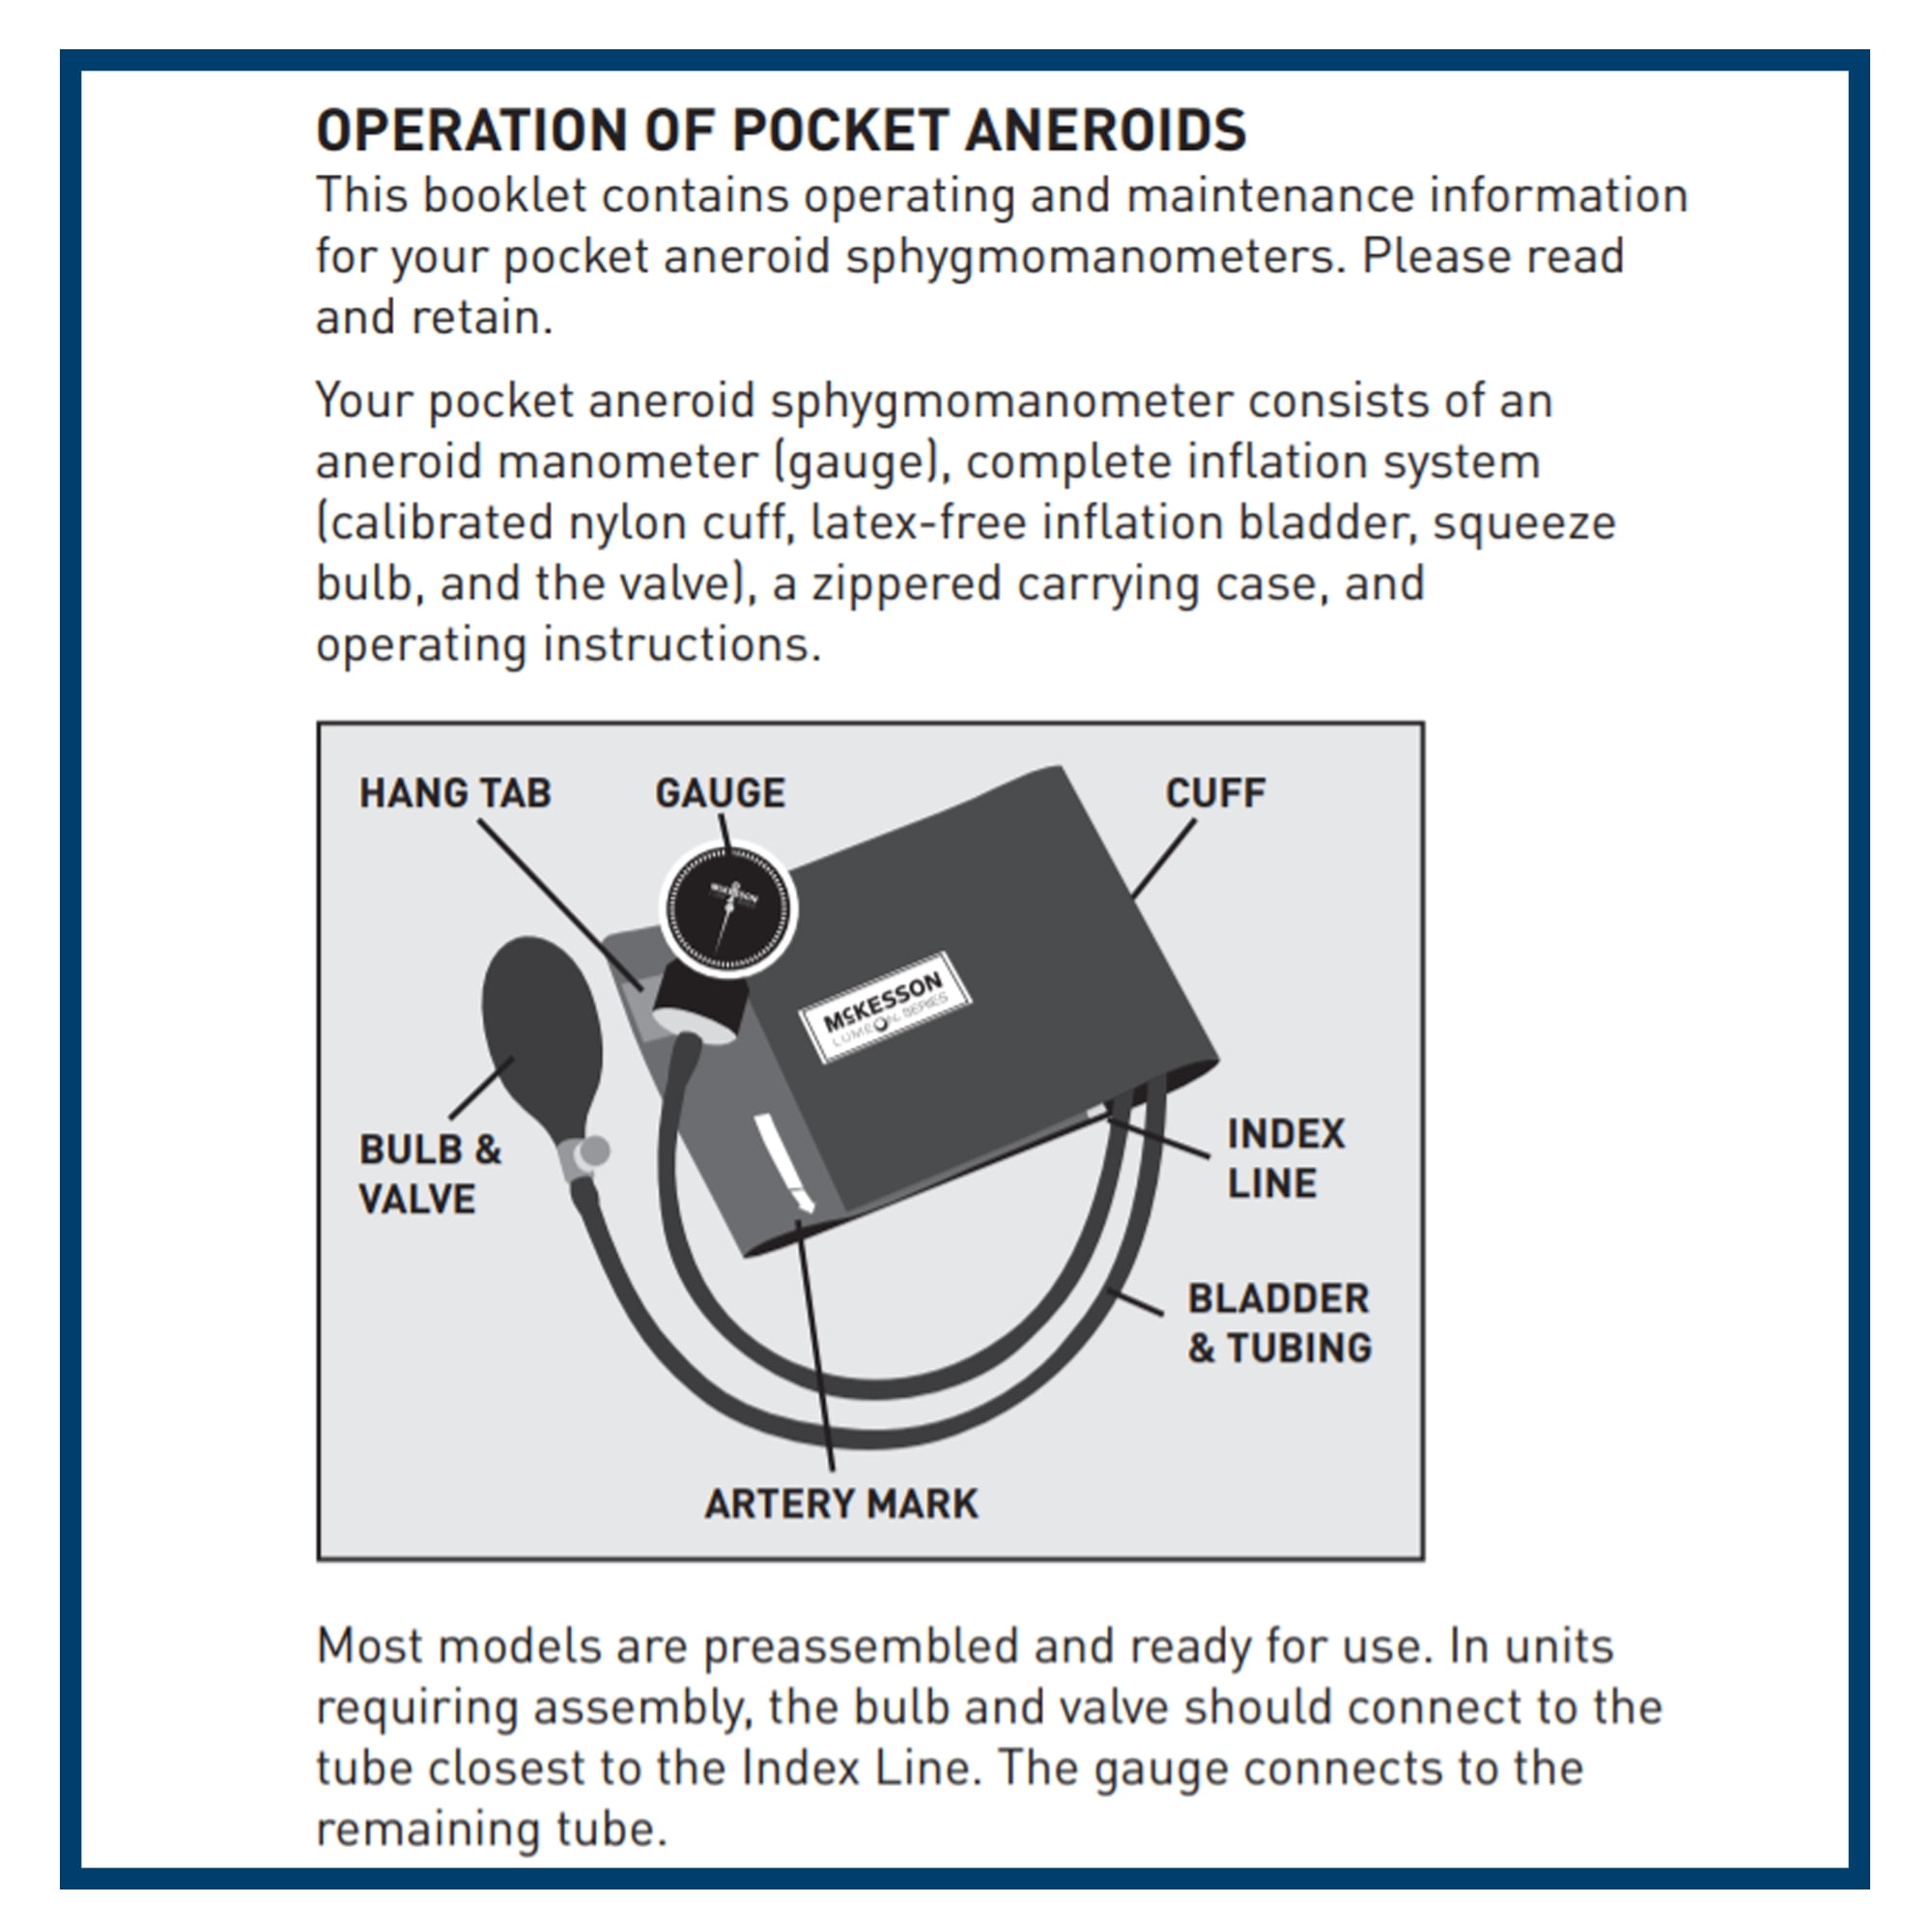  McKesson Blood Pressure Gauge for Standard Aneroid  Sphygmomanometers, 300mmHg, No-Pin Stop, 1 Count : Industrial & Scientific